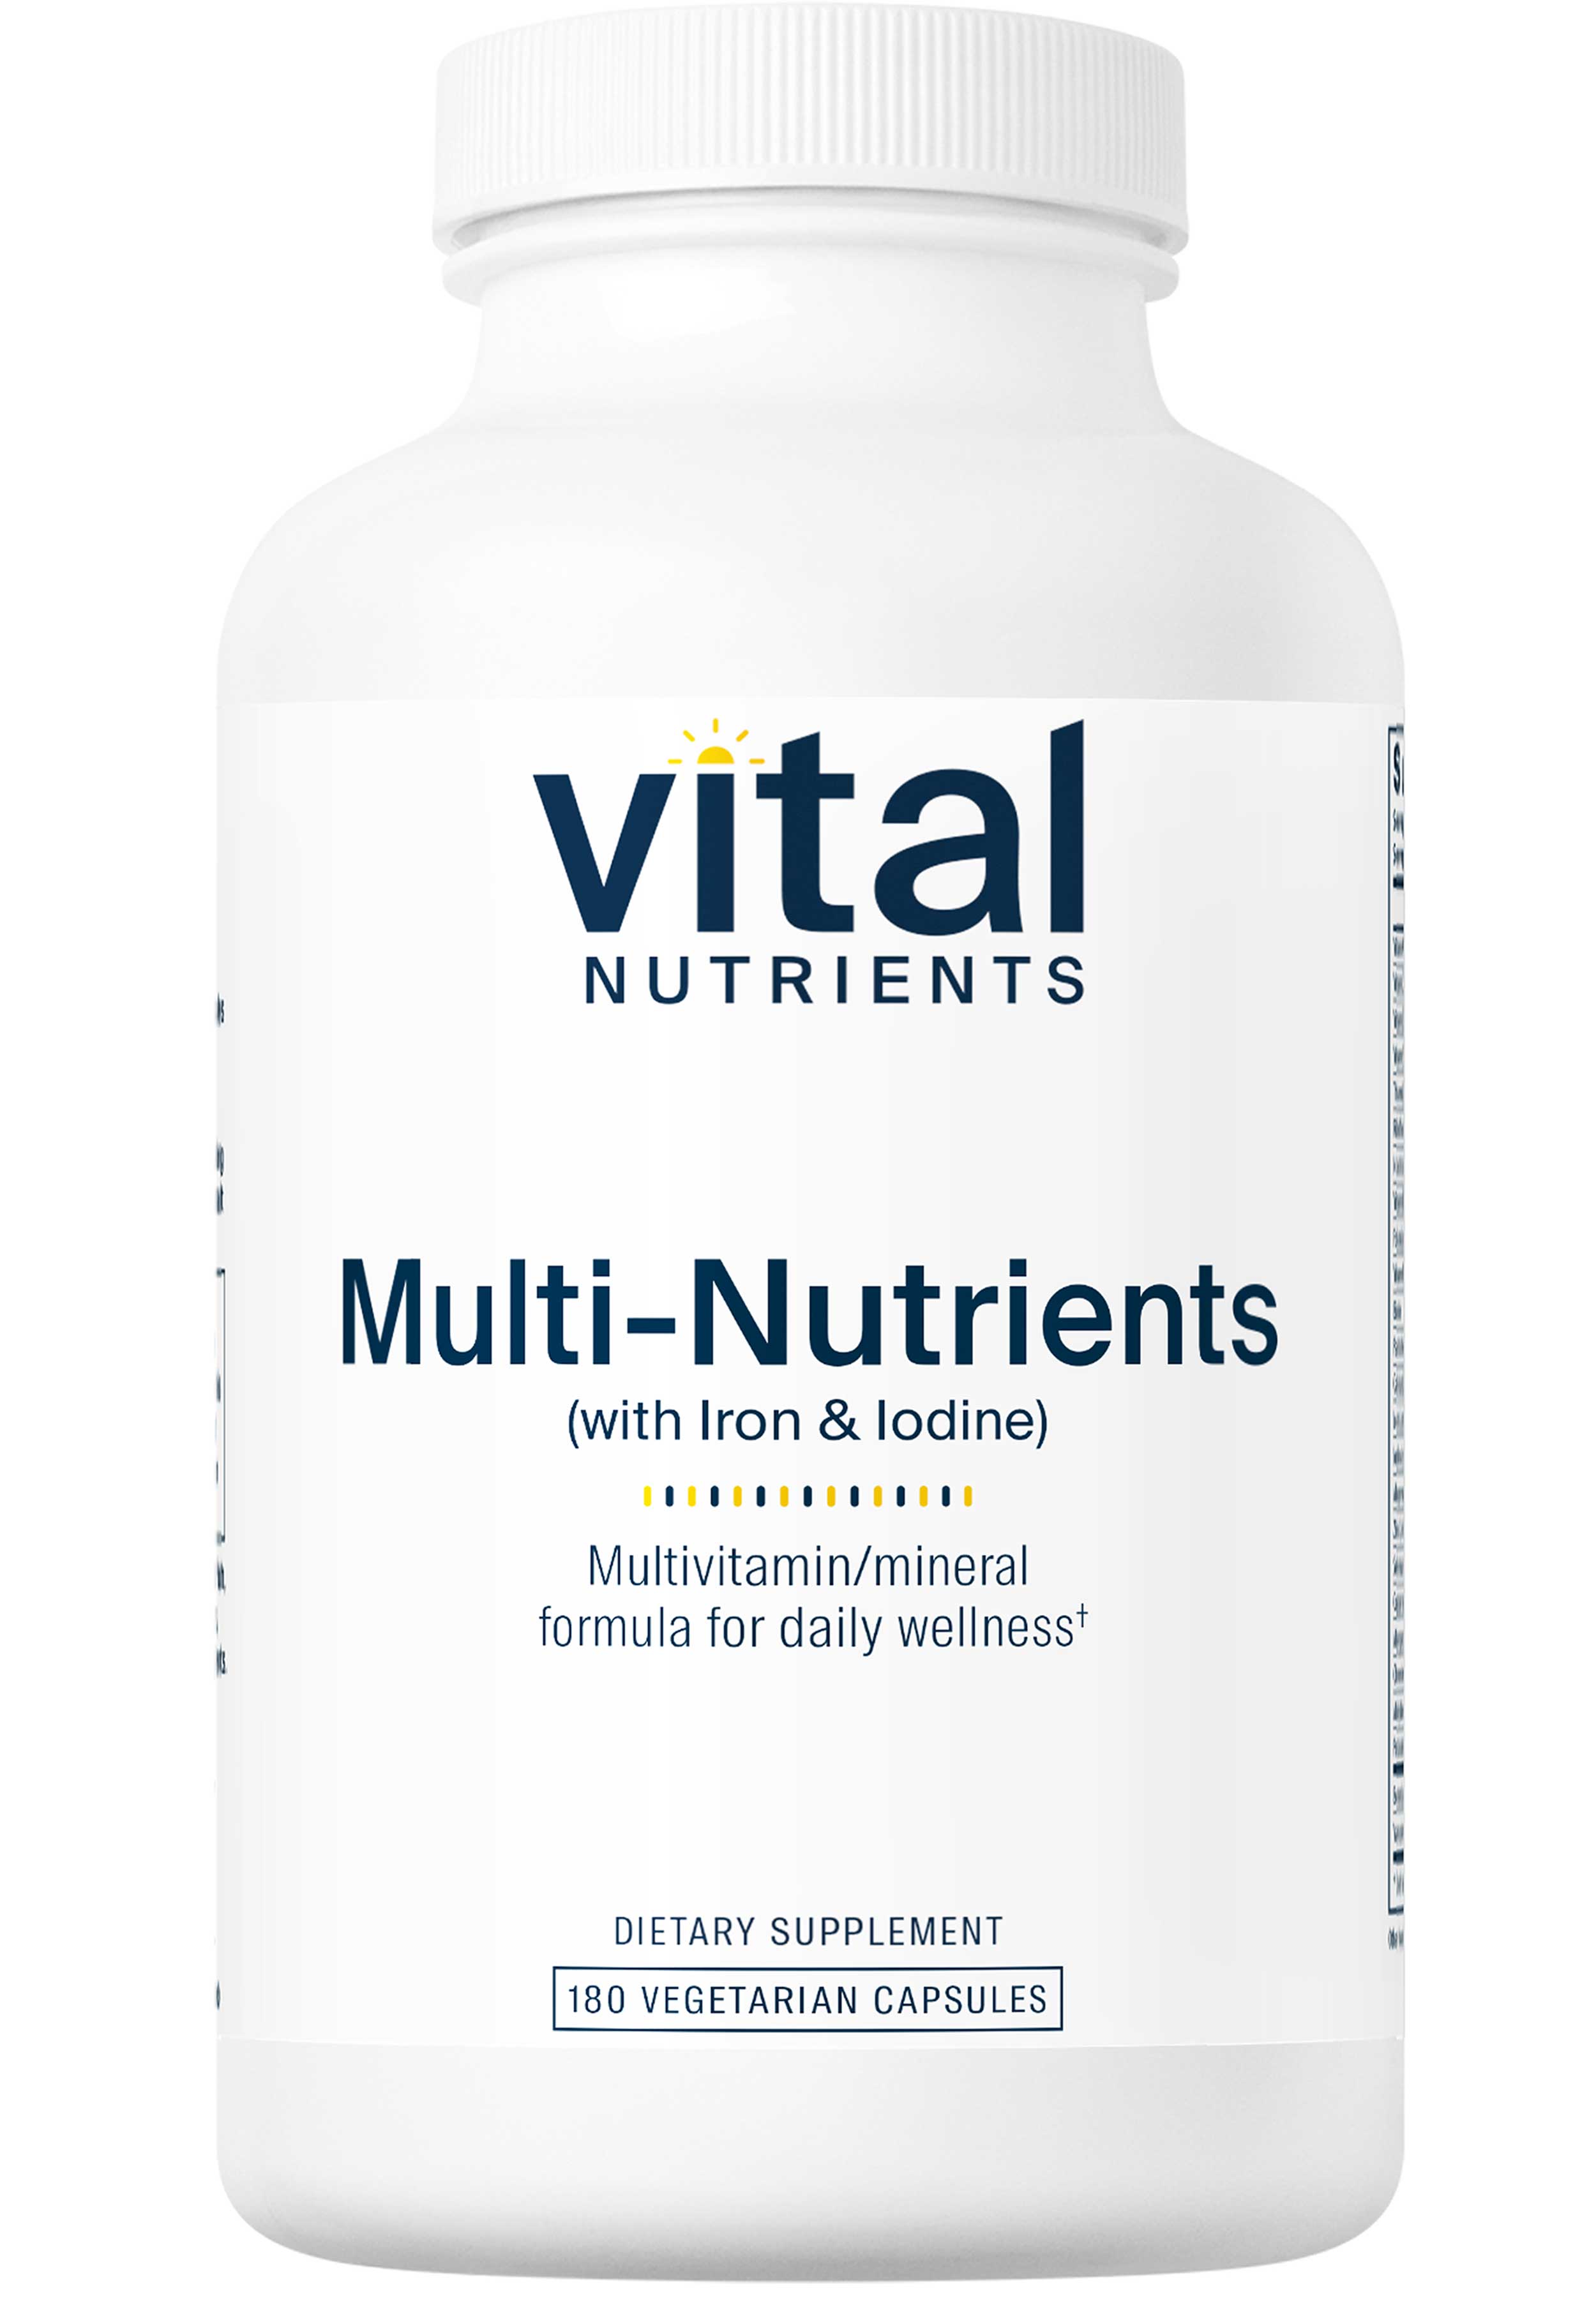 Vital Nutrients Multi-Nutrients with Iron & Iodine